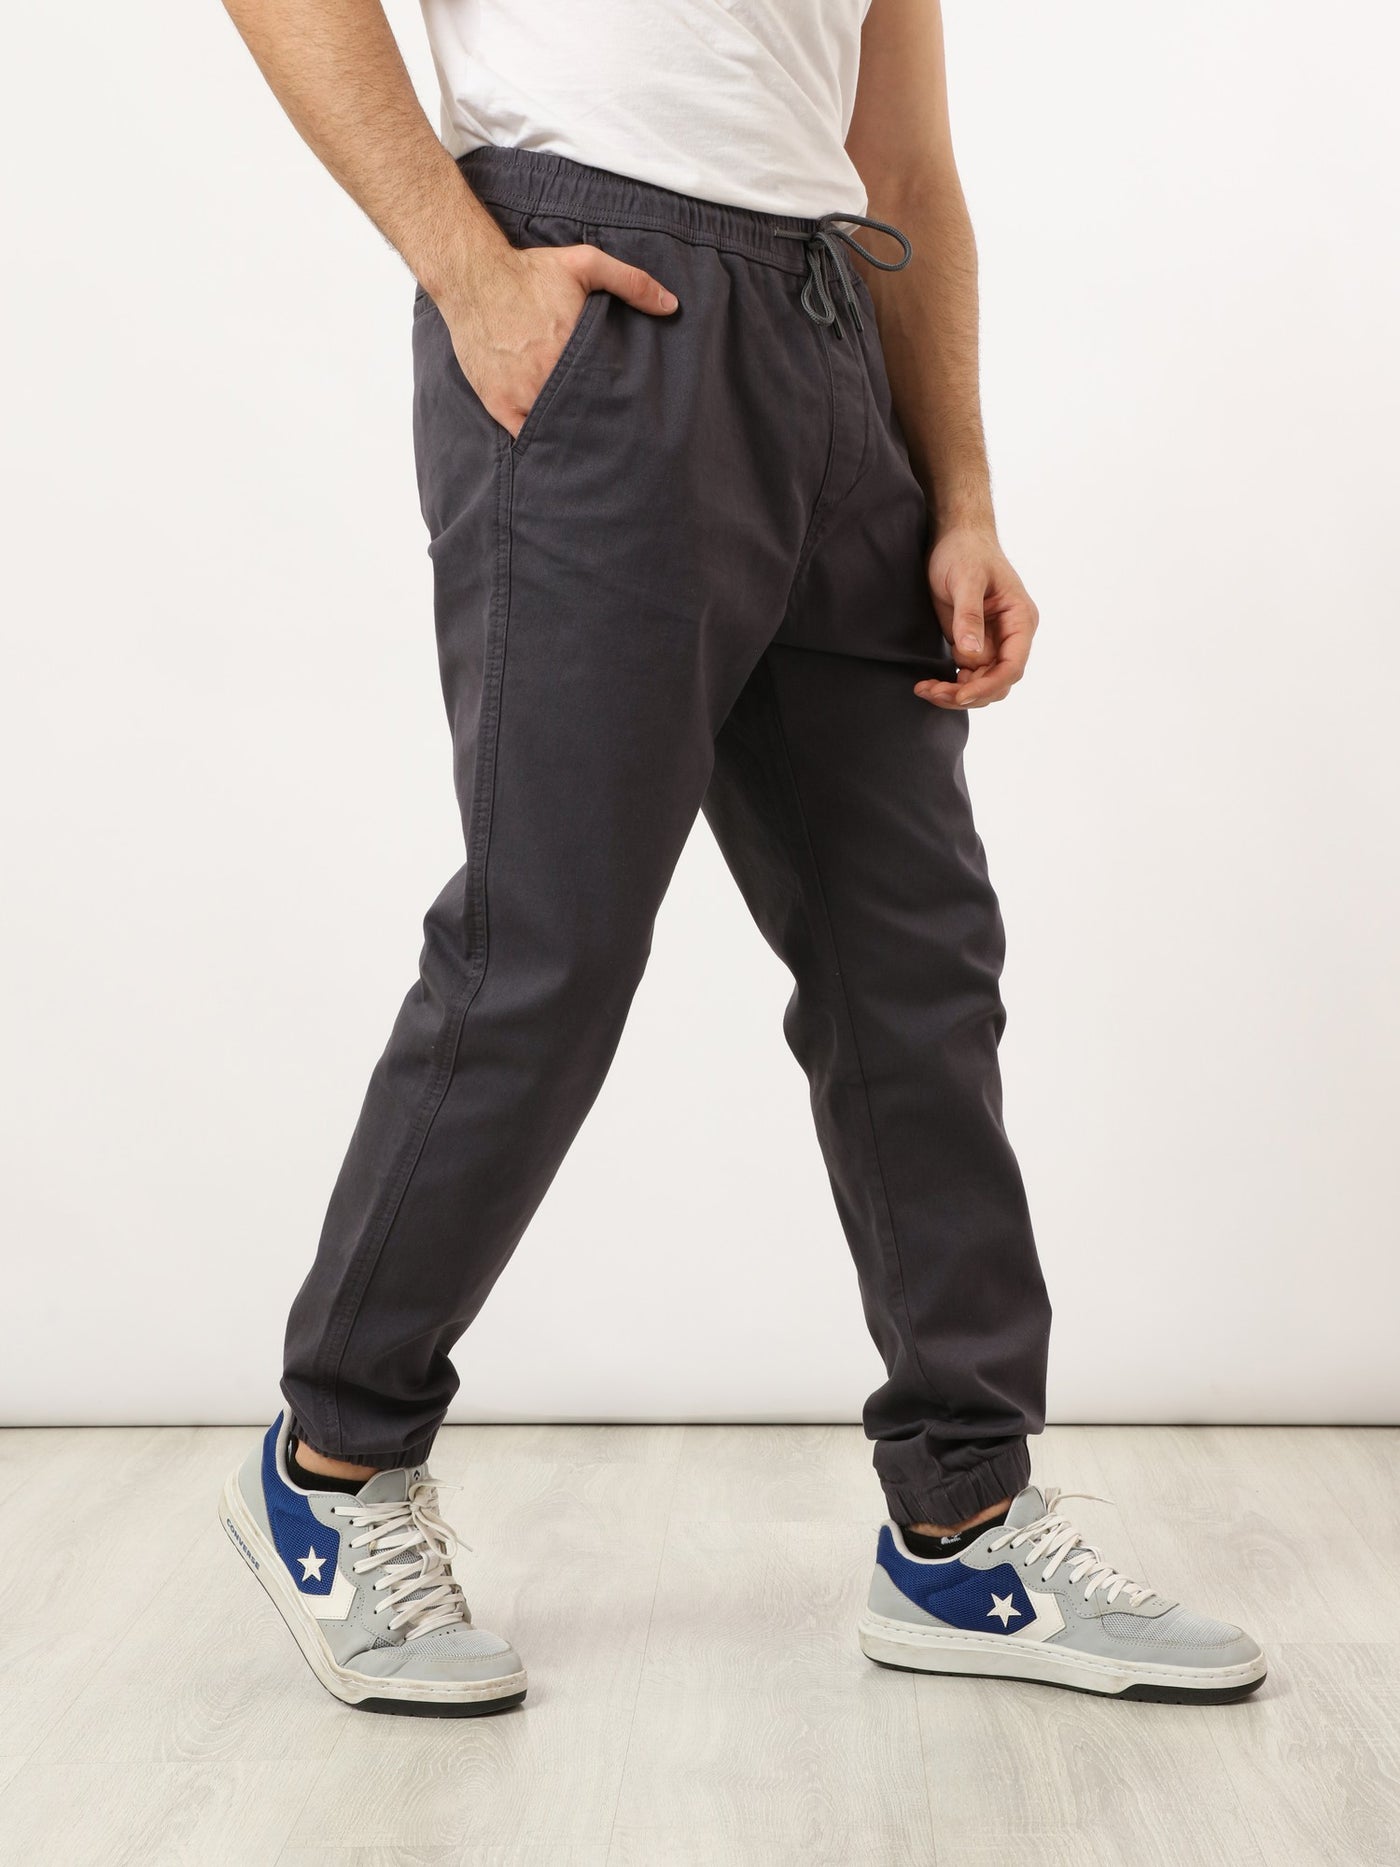 Pants - Drawstring - Side Pocket